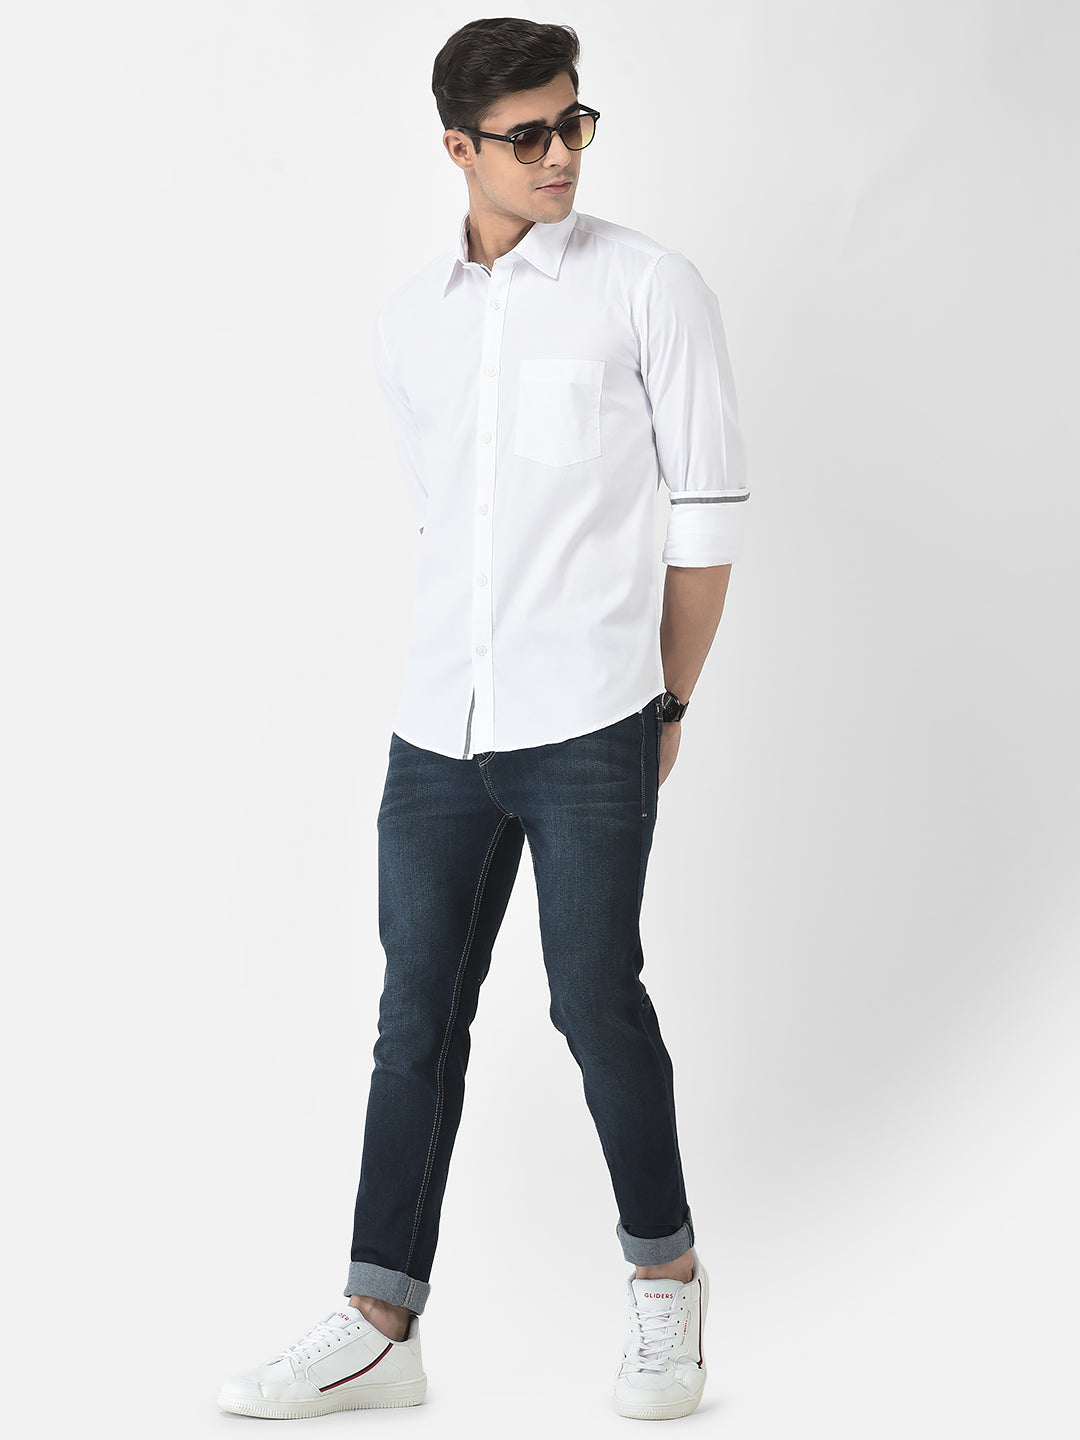  White Button-Down Shirt in Pure Cotton